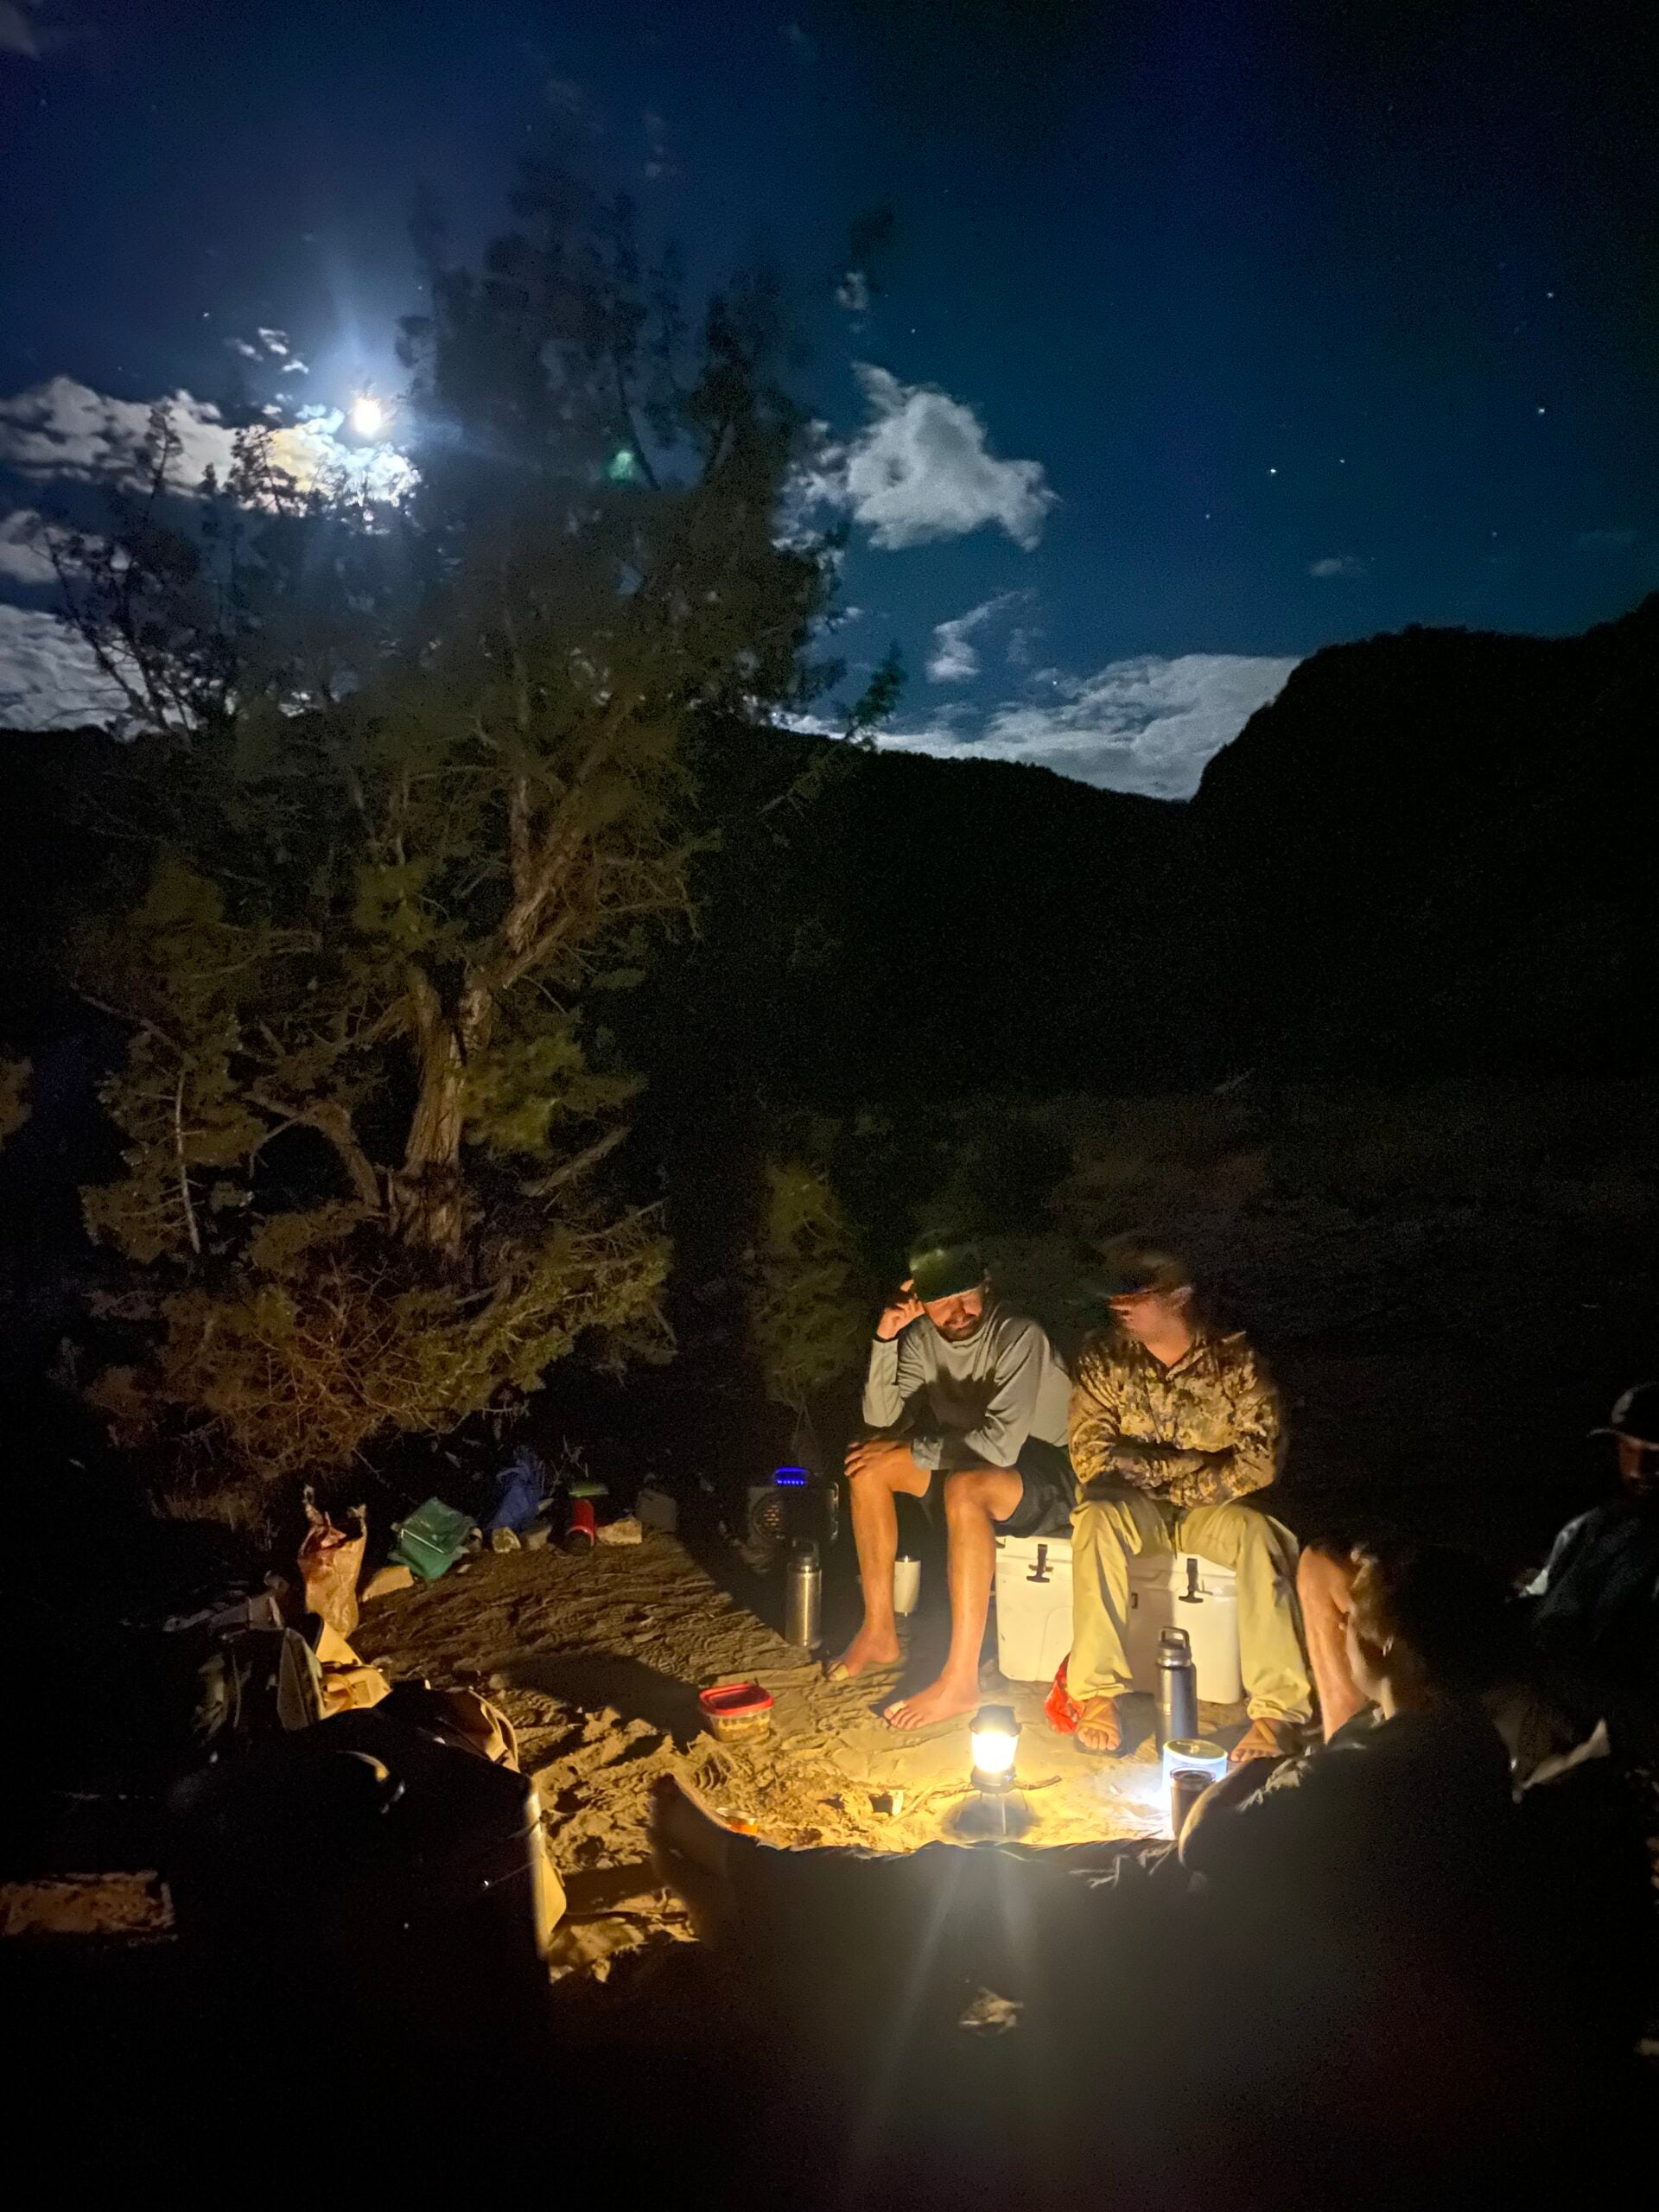 fishermen sitting around a campfire at night